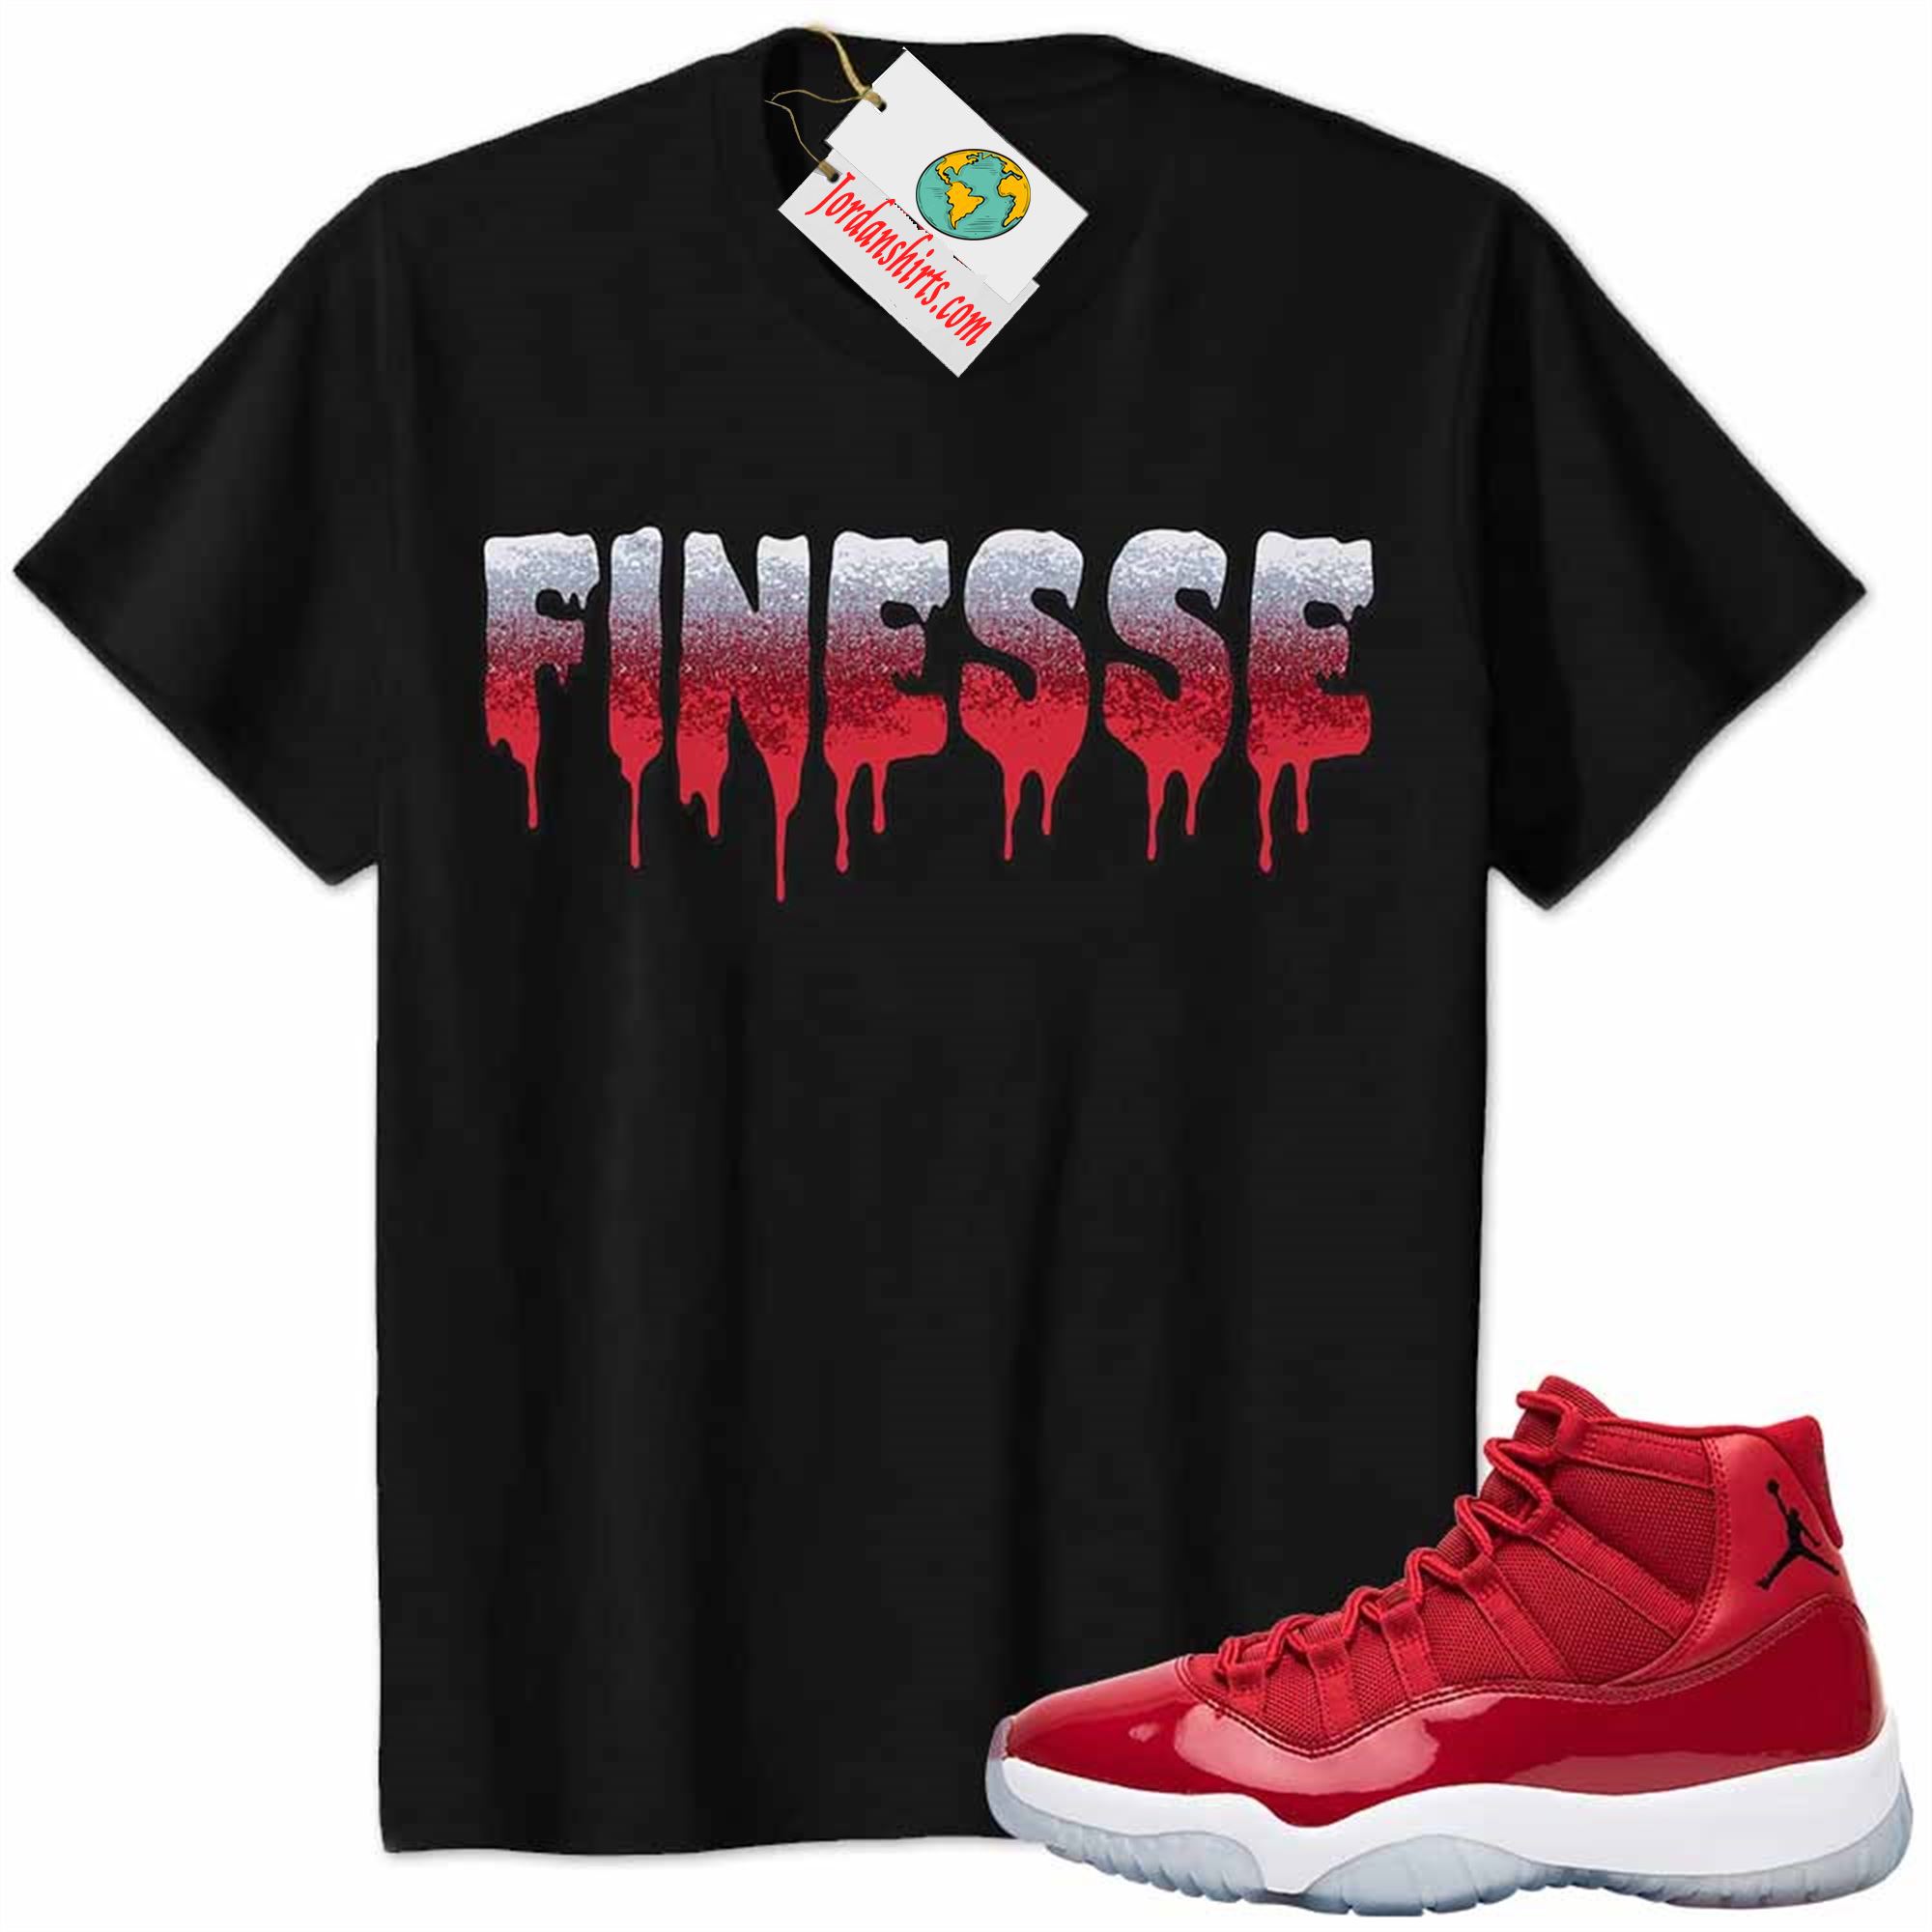 Jordan 11 Shirt, Jordan 11 Gym Red Shirt Finesse Drip Black Full Size Up To 5xl